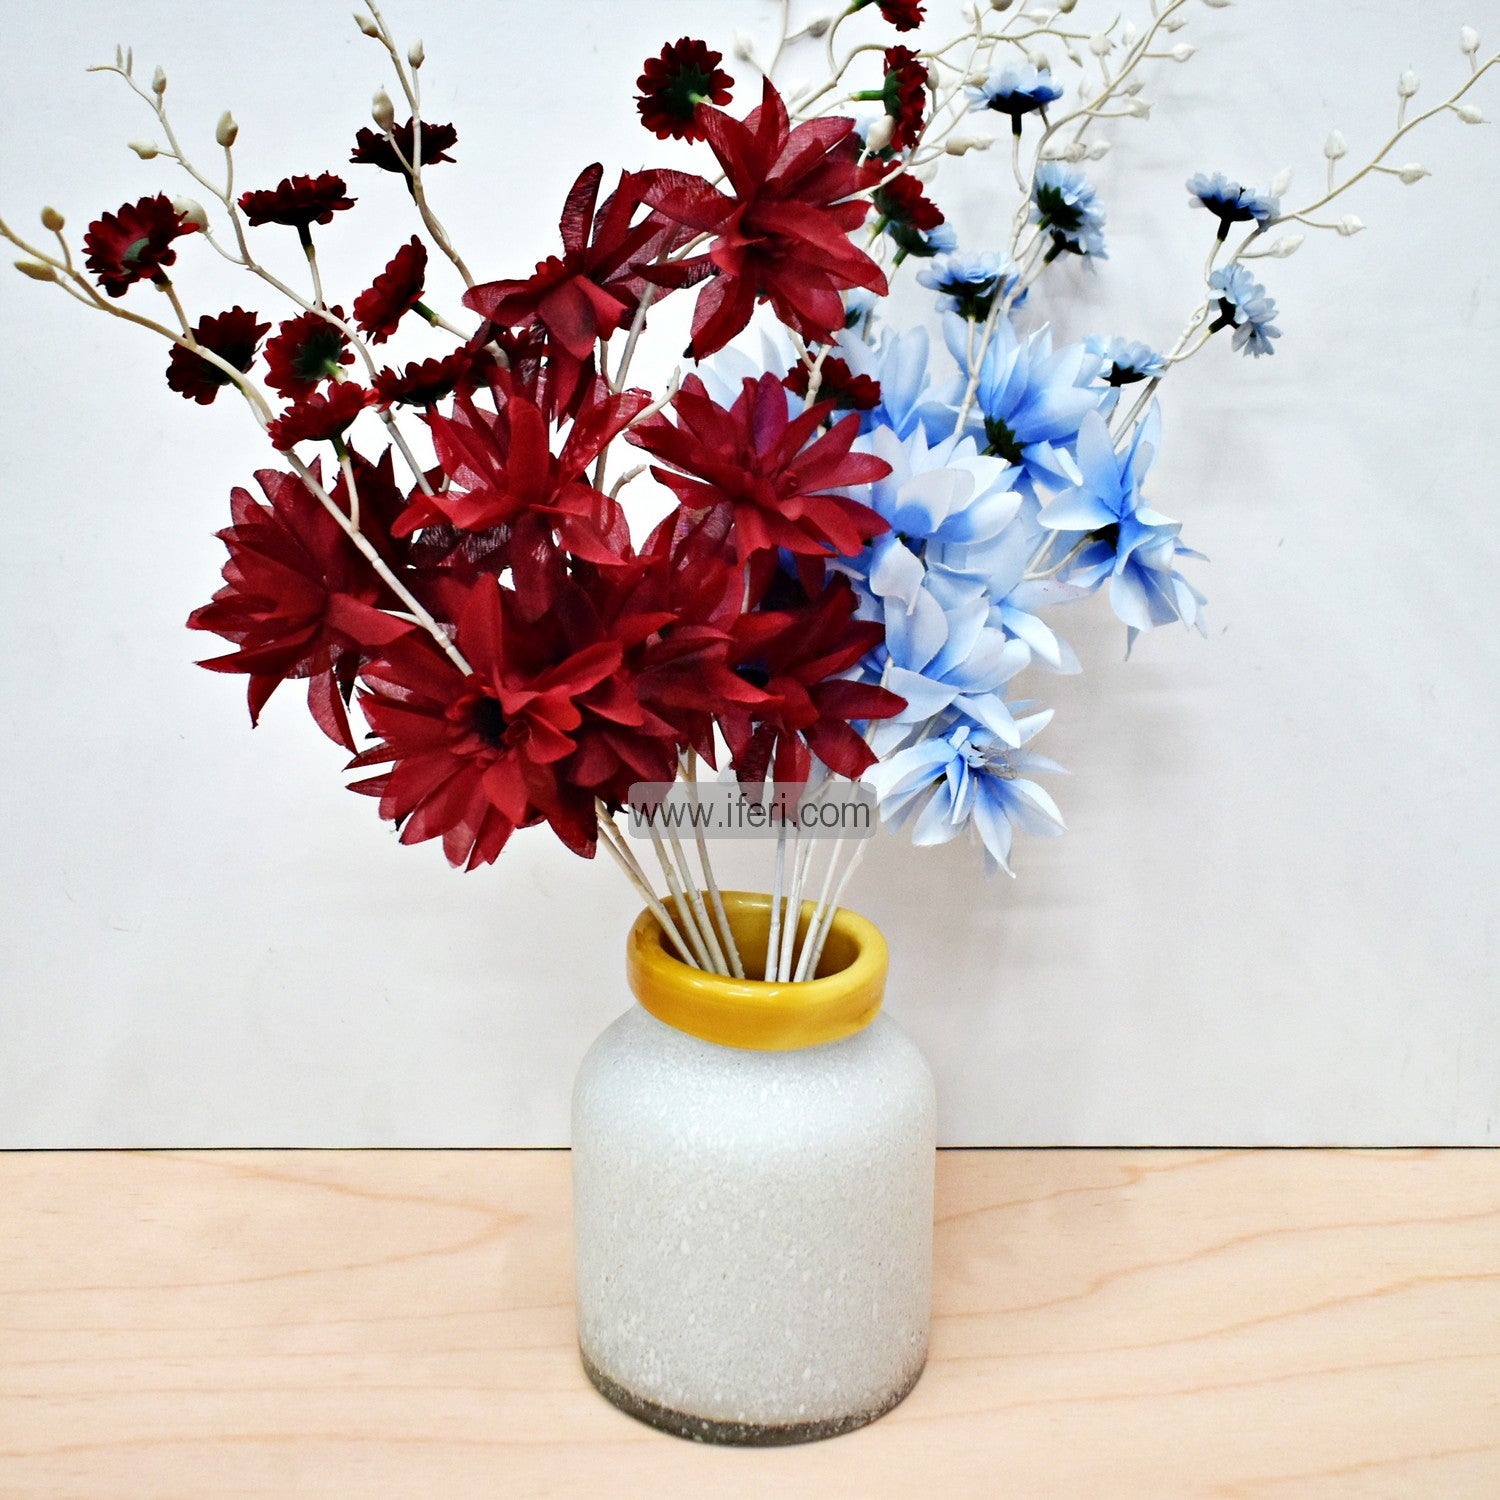 6 Inch Glass Decorative Flower Vase FT1355